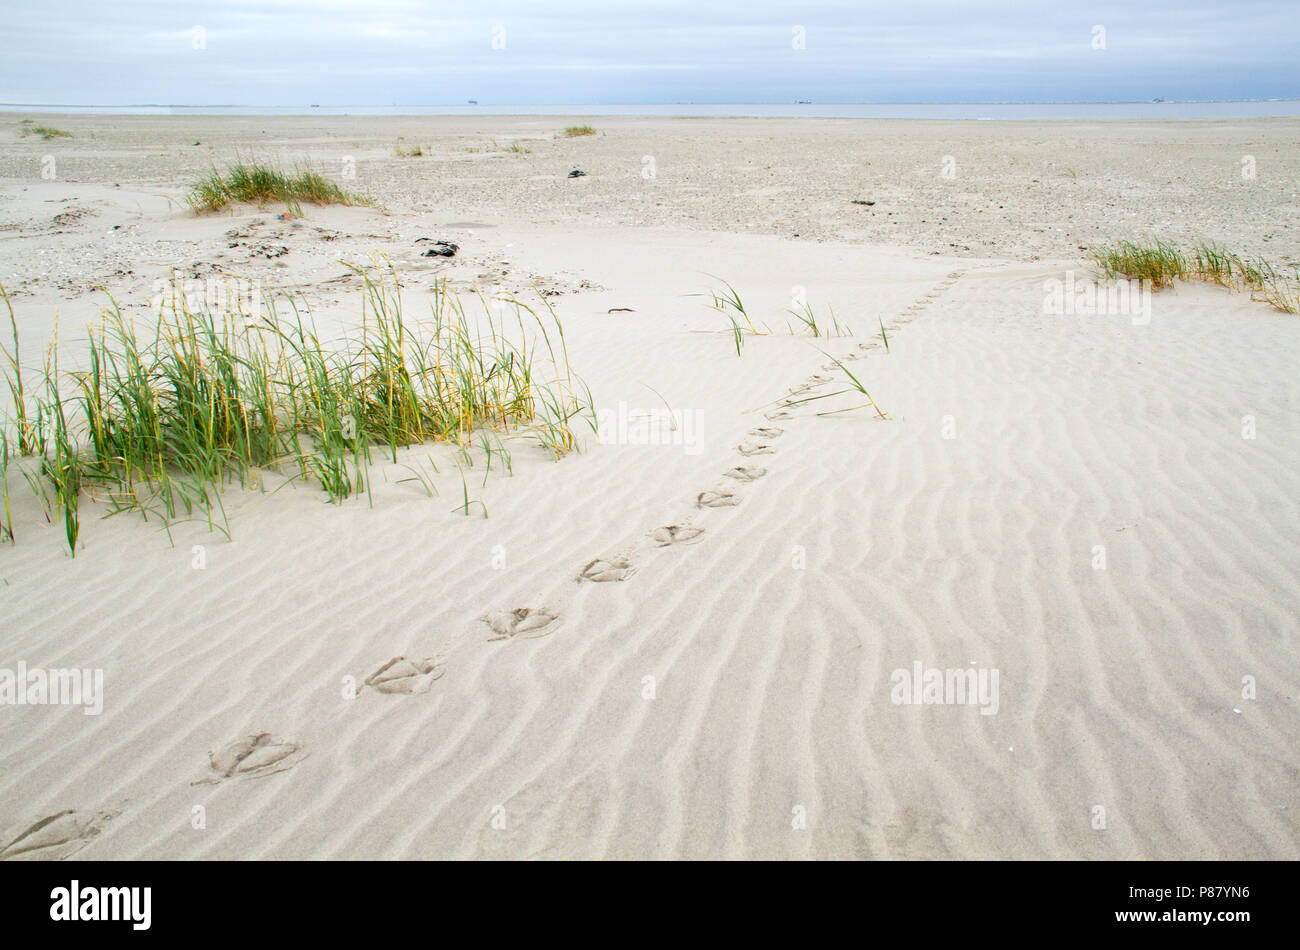 Footprints of a big bird, probably a Goose, through the rippled sand of a vast beach towards the sea Stock Photo